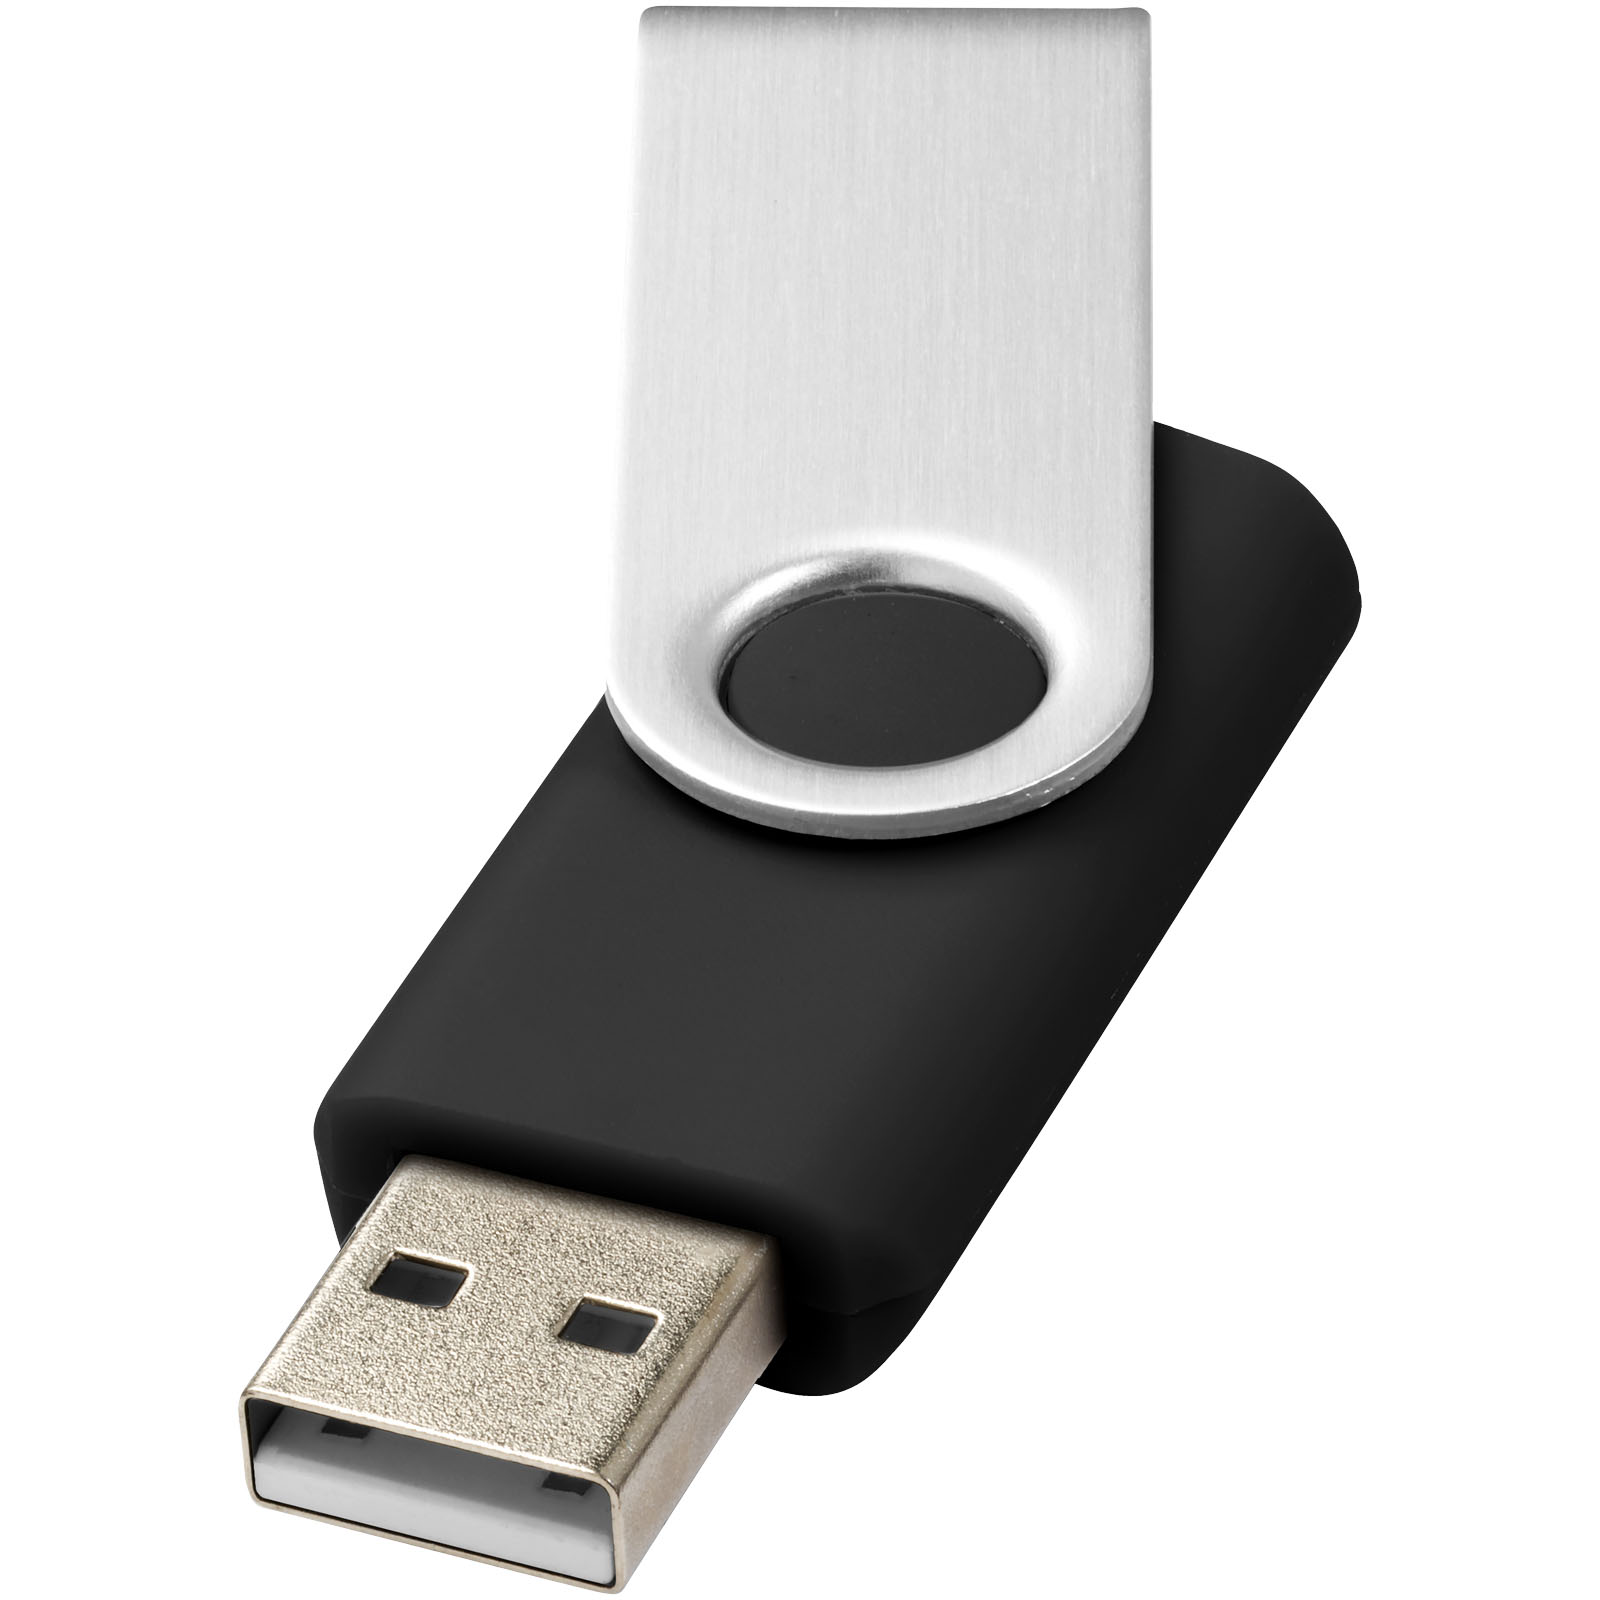 16GB USB flash drive - Broughton Astley - Clayton-le-Moors